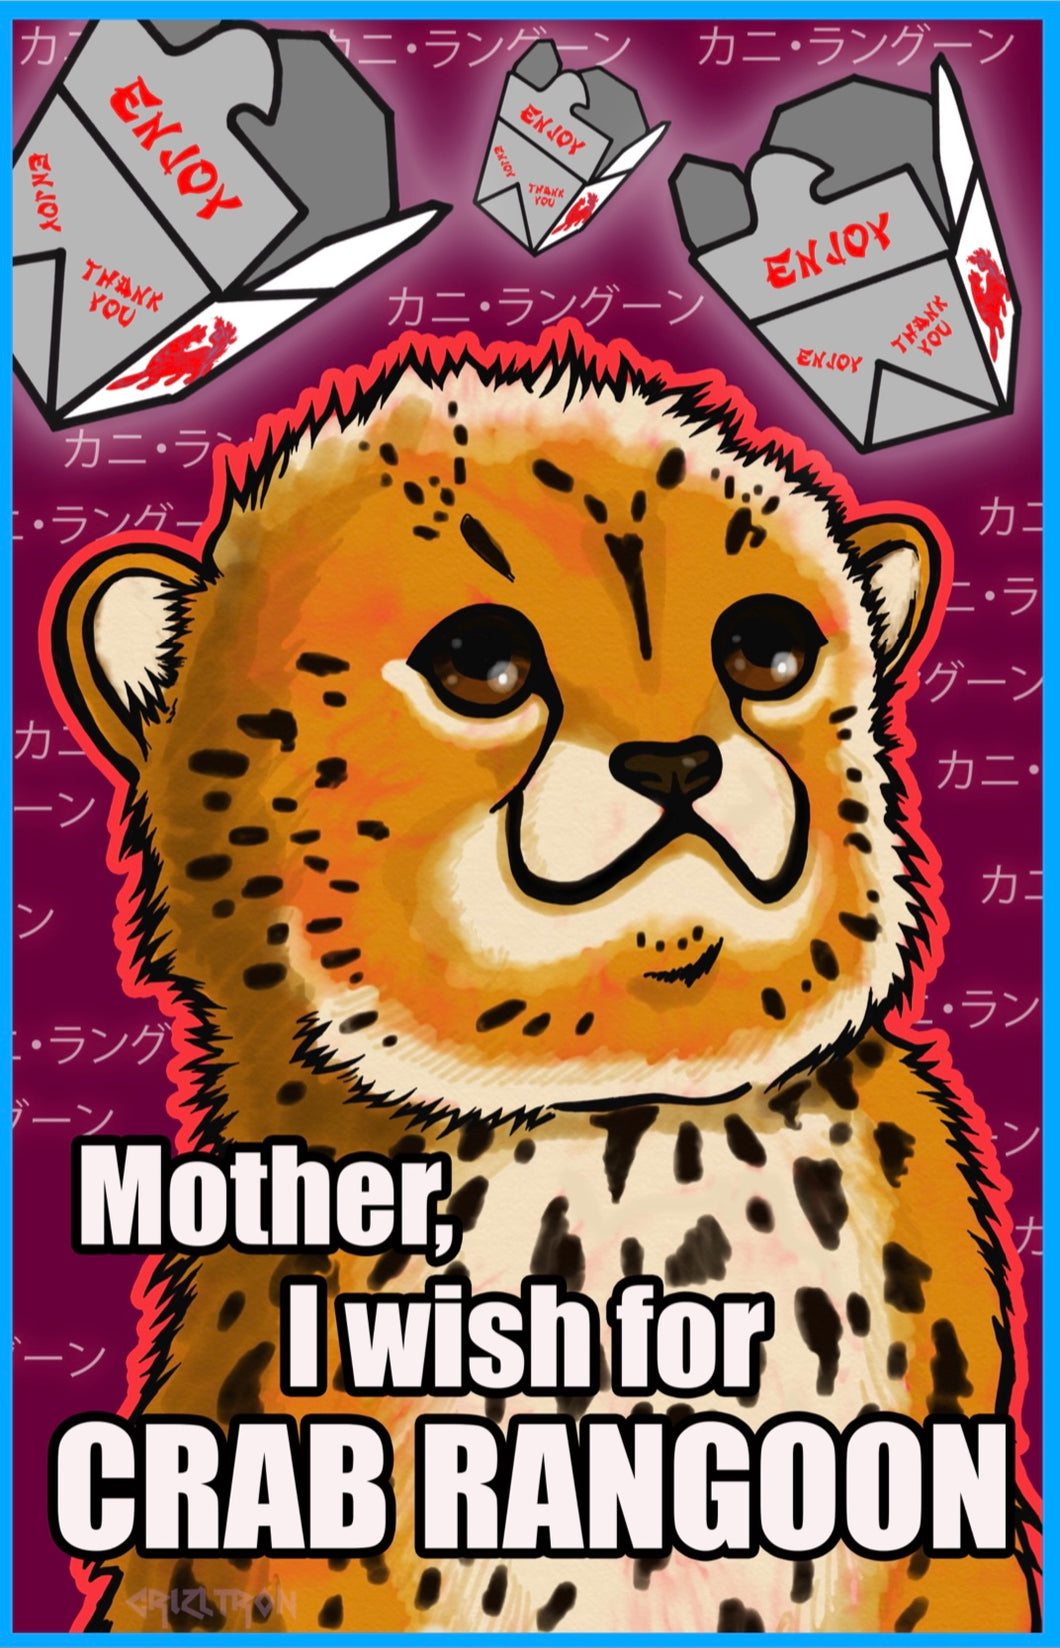 Mother, I wish for Crab Rangoon Meme - Baby Cheetah - Art Print Poster